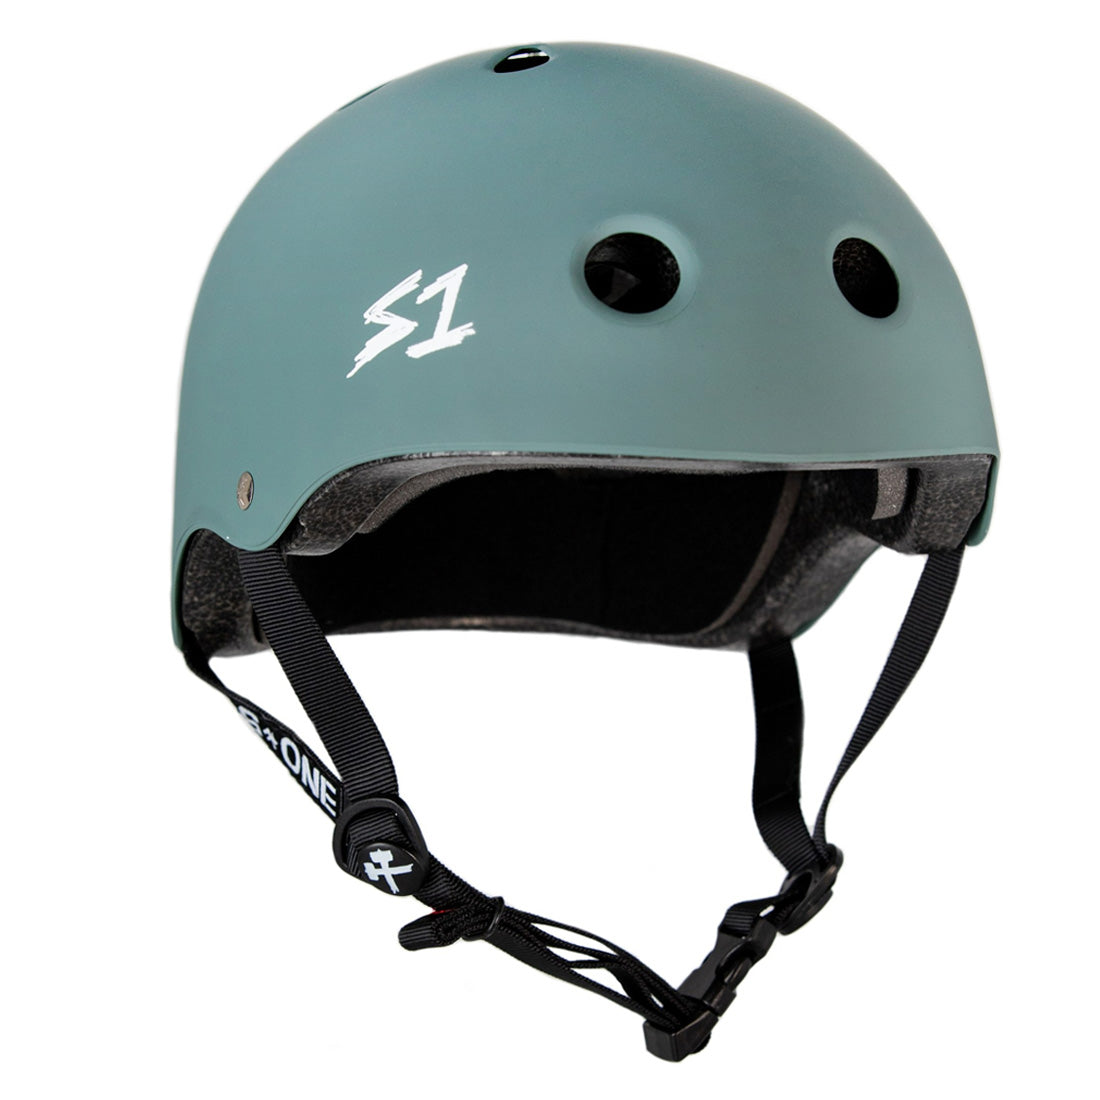 S-One Lifer Helmet - Tree Green Matte Helmets